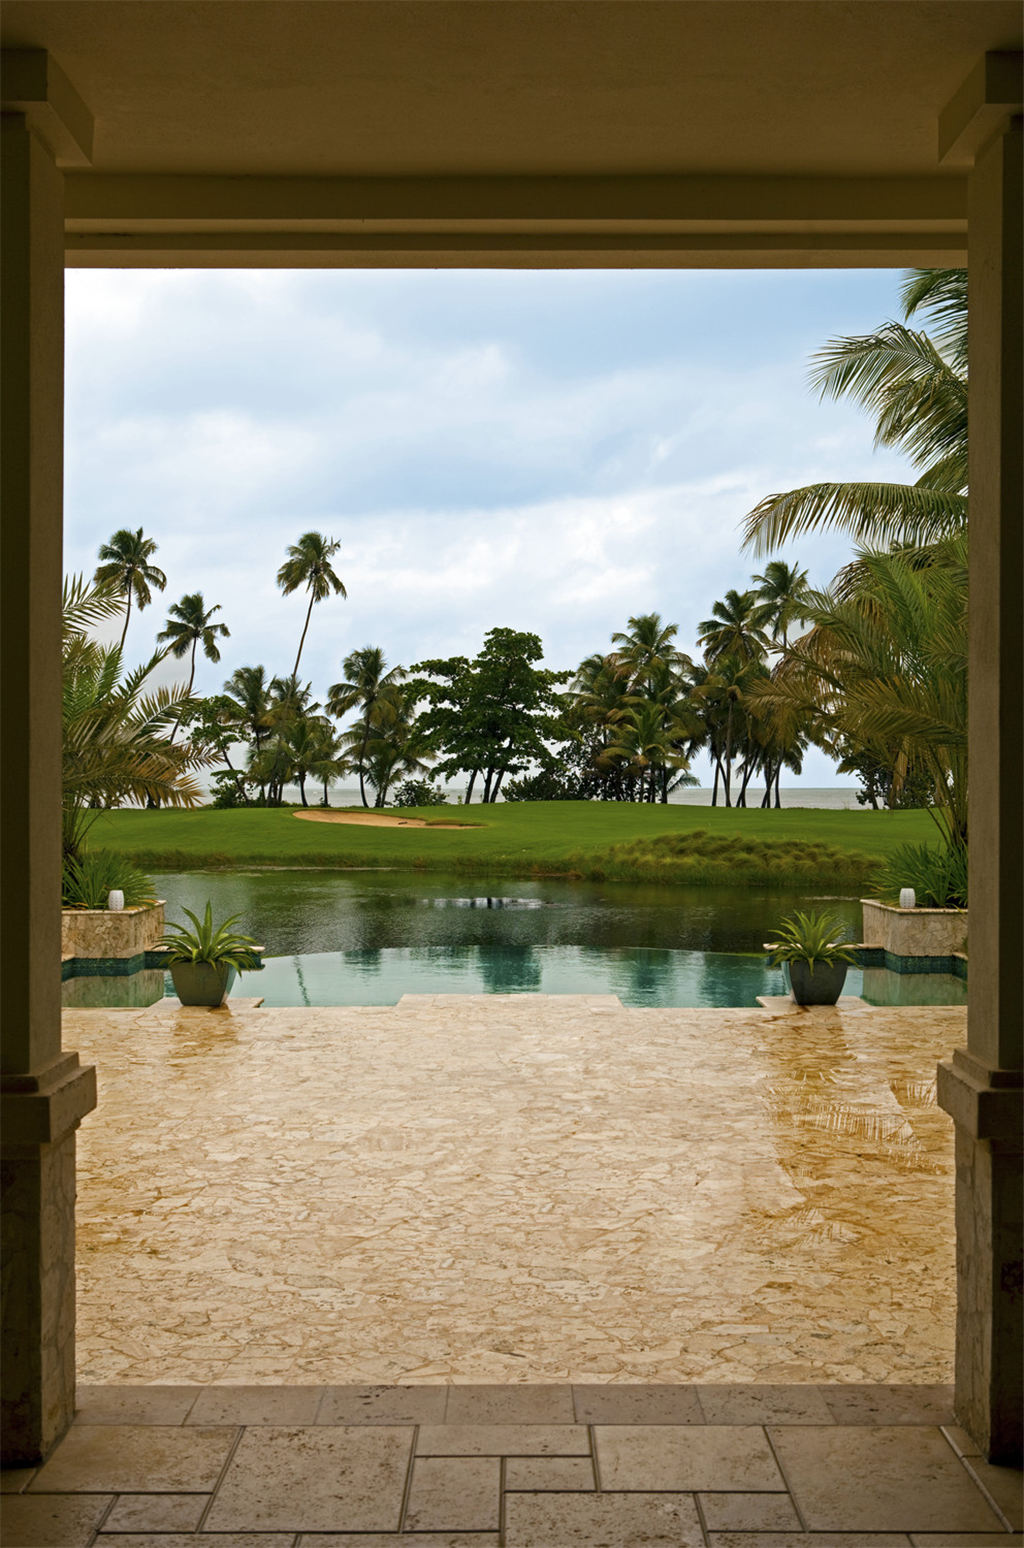 21)St. Regis Bahia Beach Resort, Puerto RicoInfinity pool view Ĕz.jpg